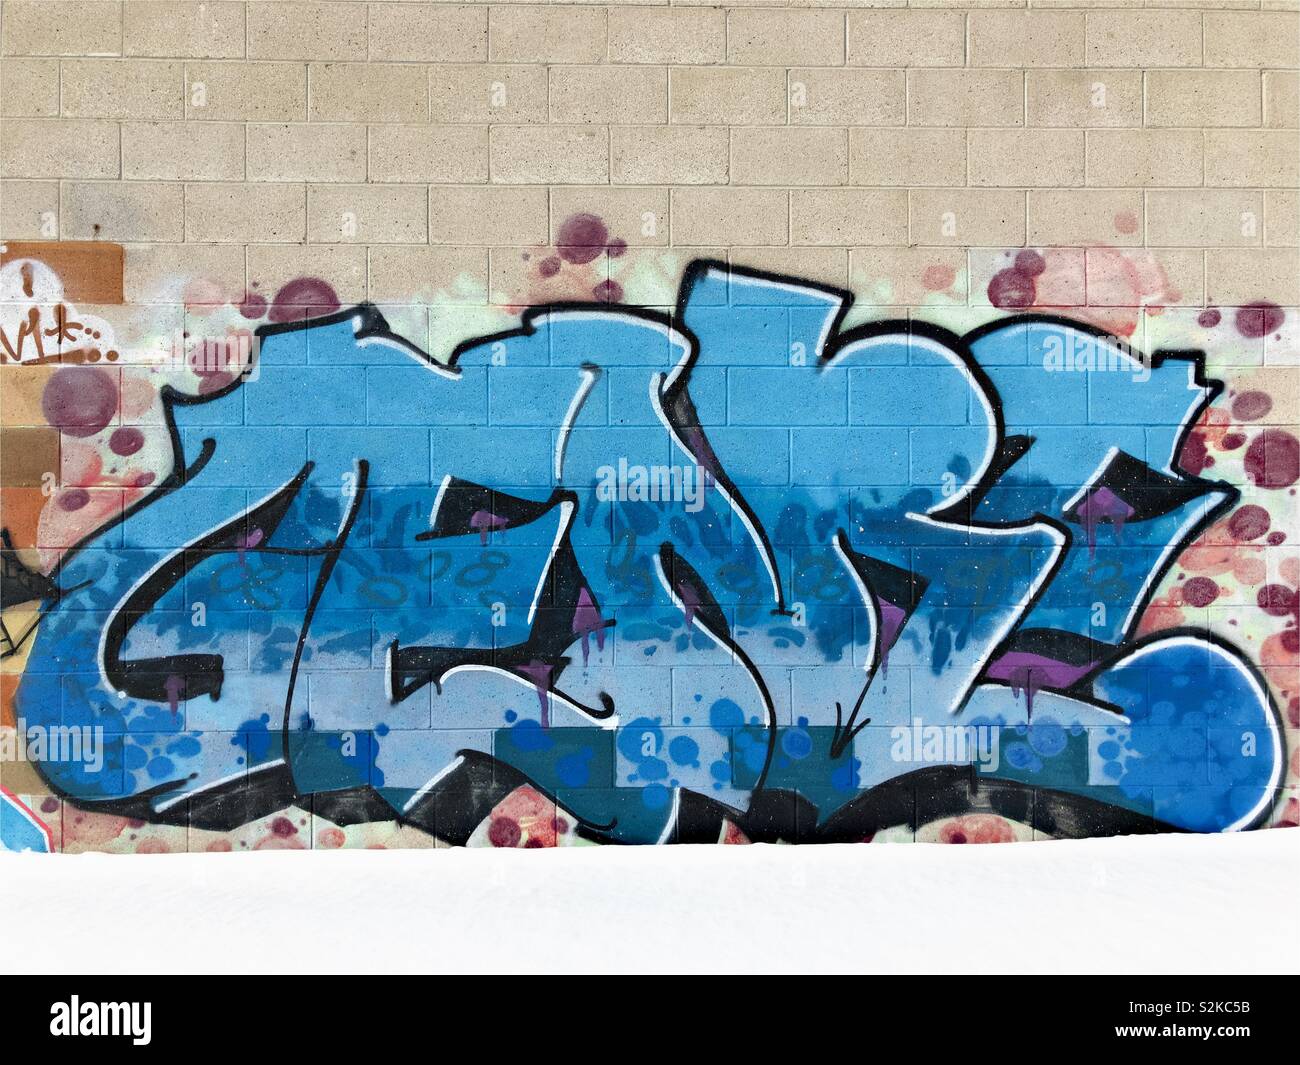 Graffiti on tan wall. Stock Photo